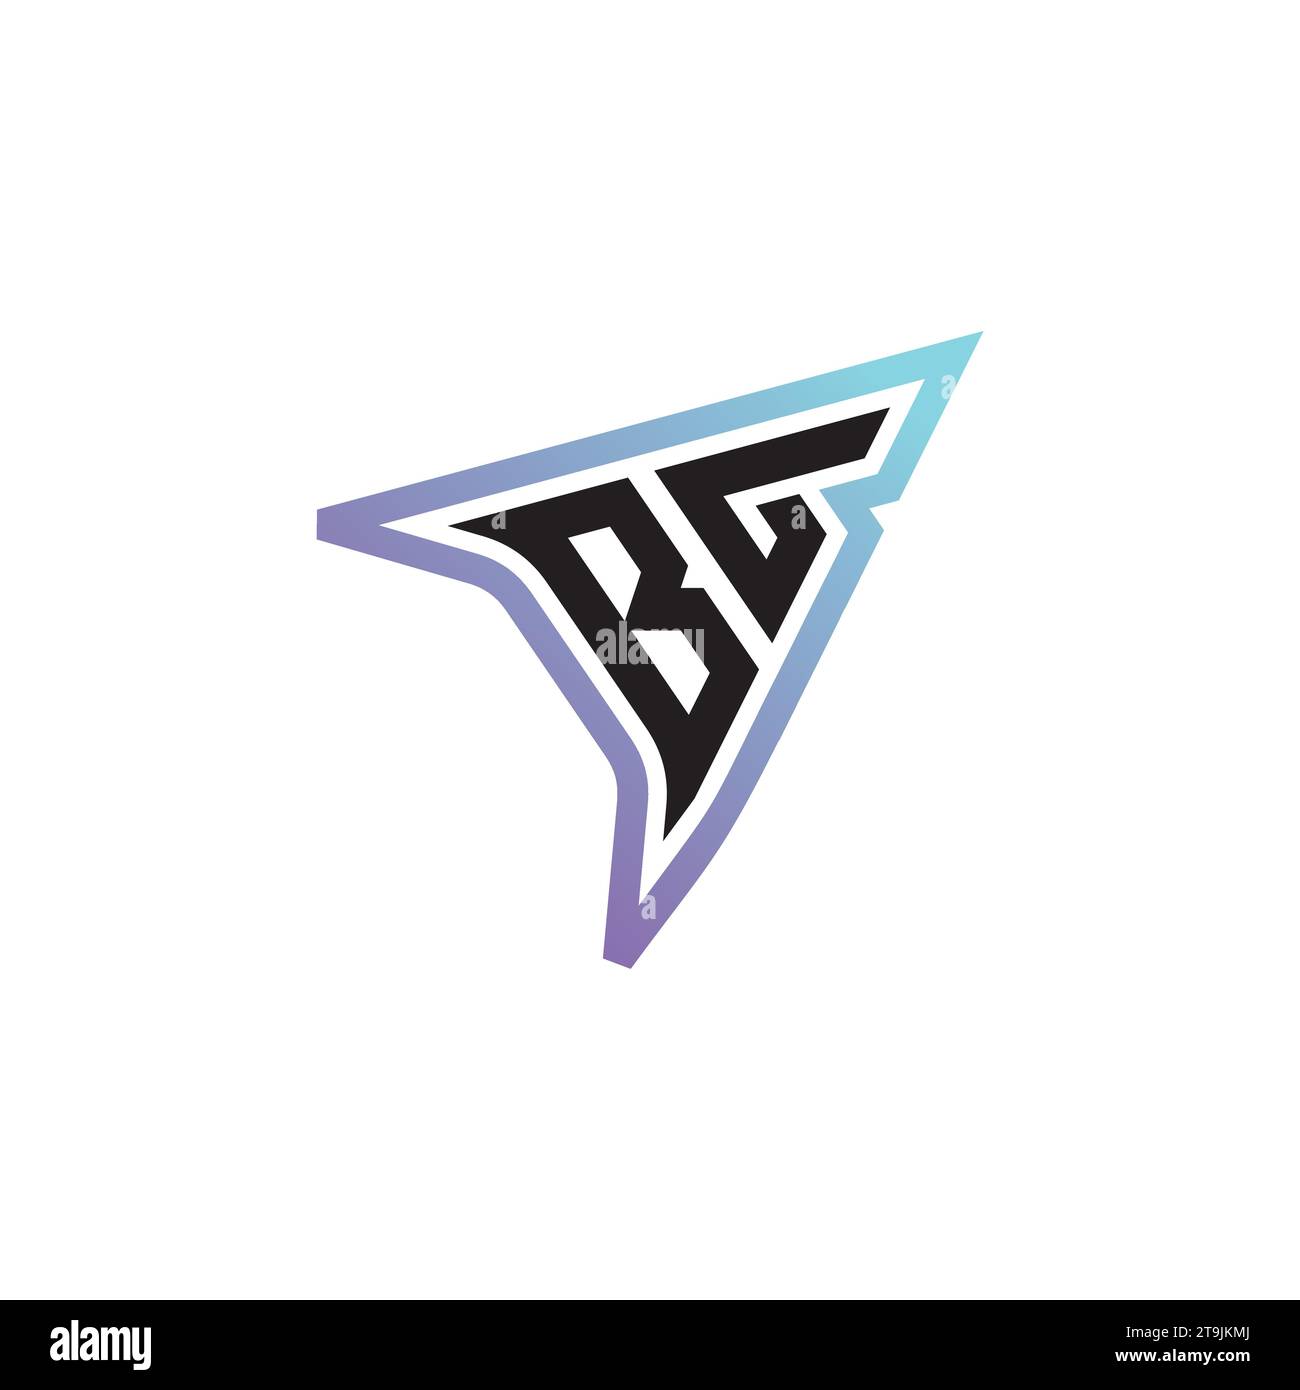 BG letter combination cool logo esport or gaming initial logo as a inspirational concept design Stock Vector